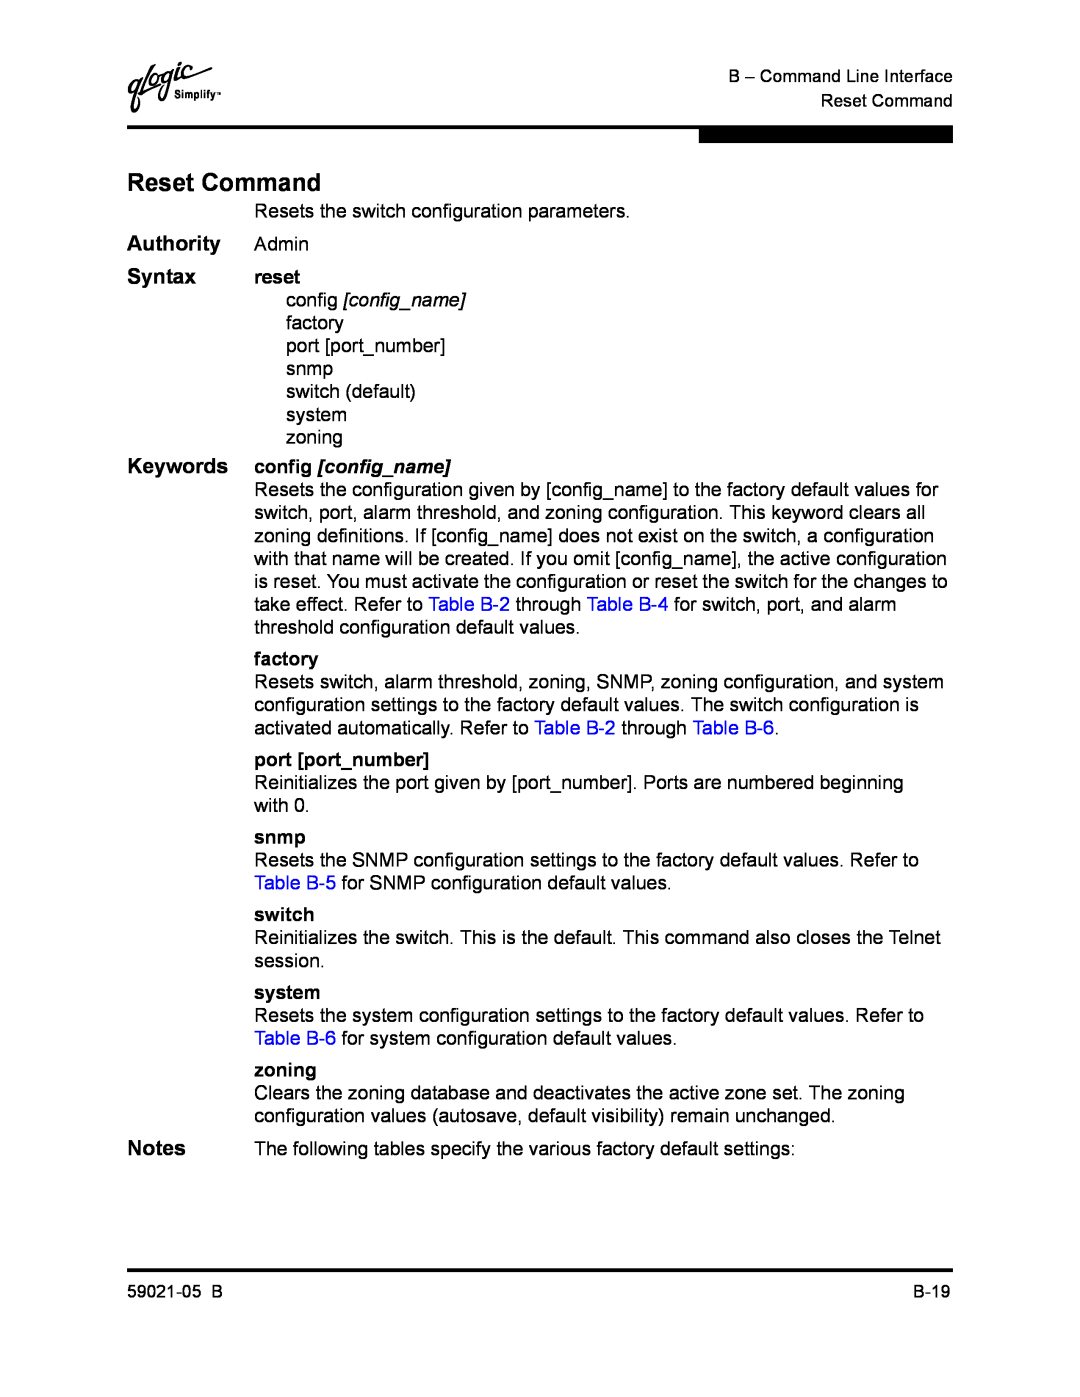 Q-Logic 59021-05 B manual Reset Command, config configname, Authority, Syntax, Keywords 